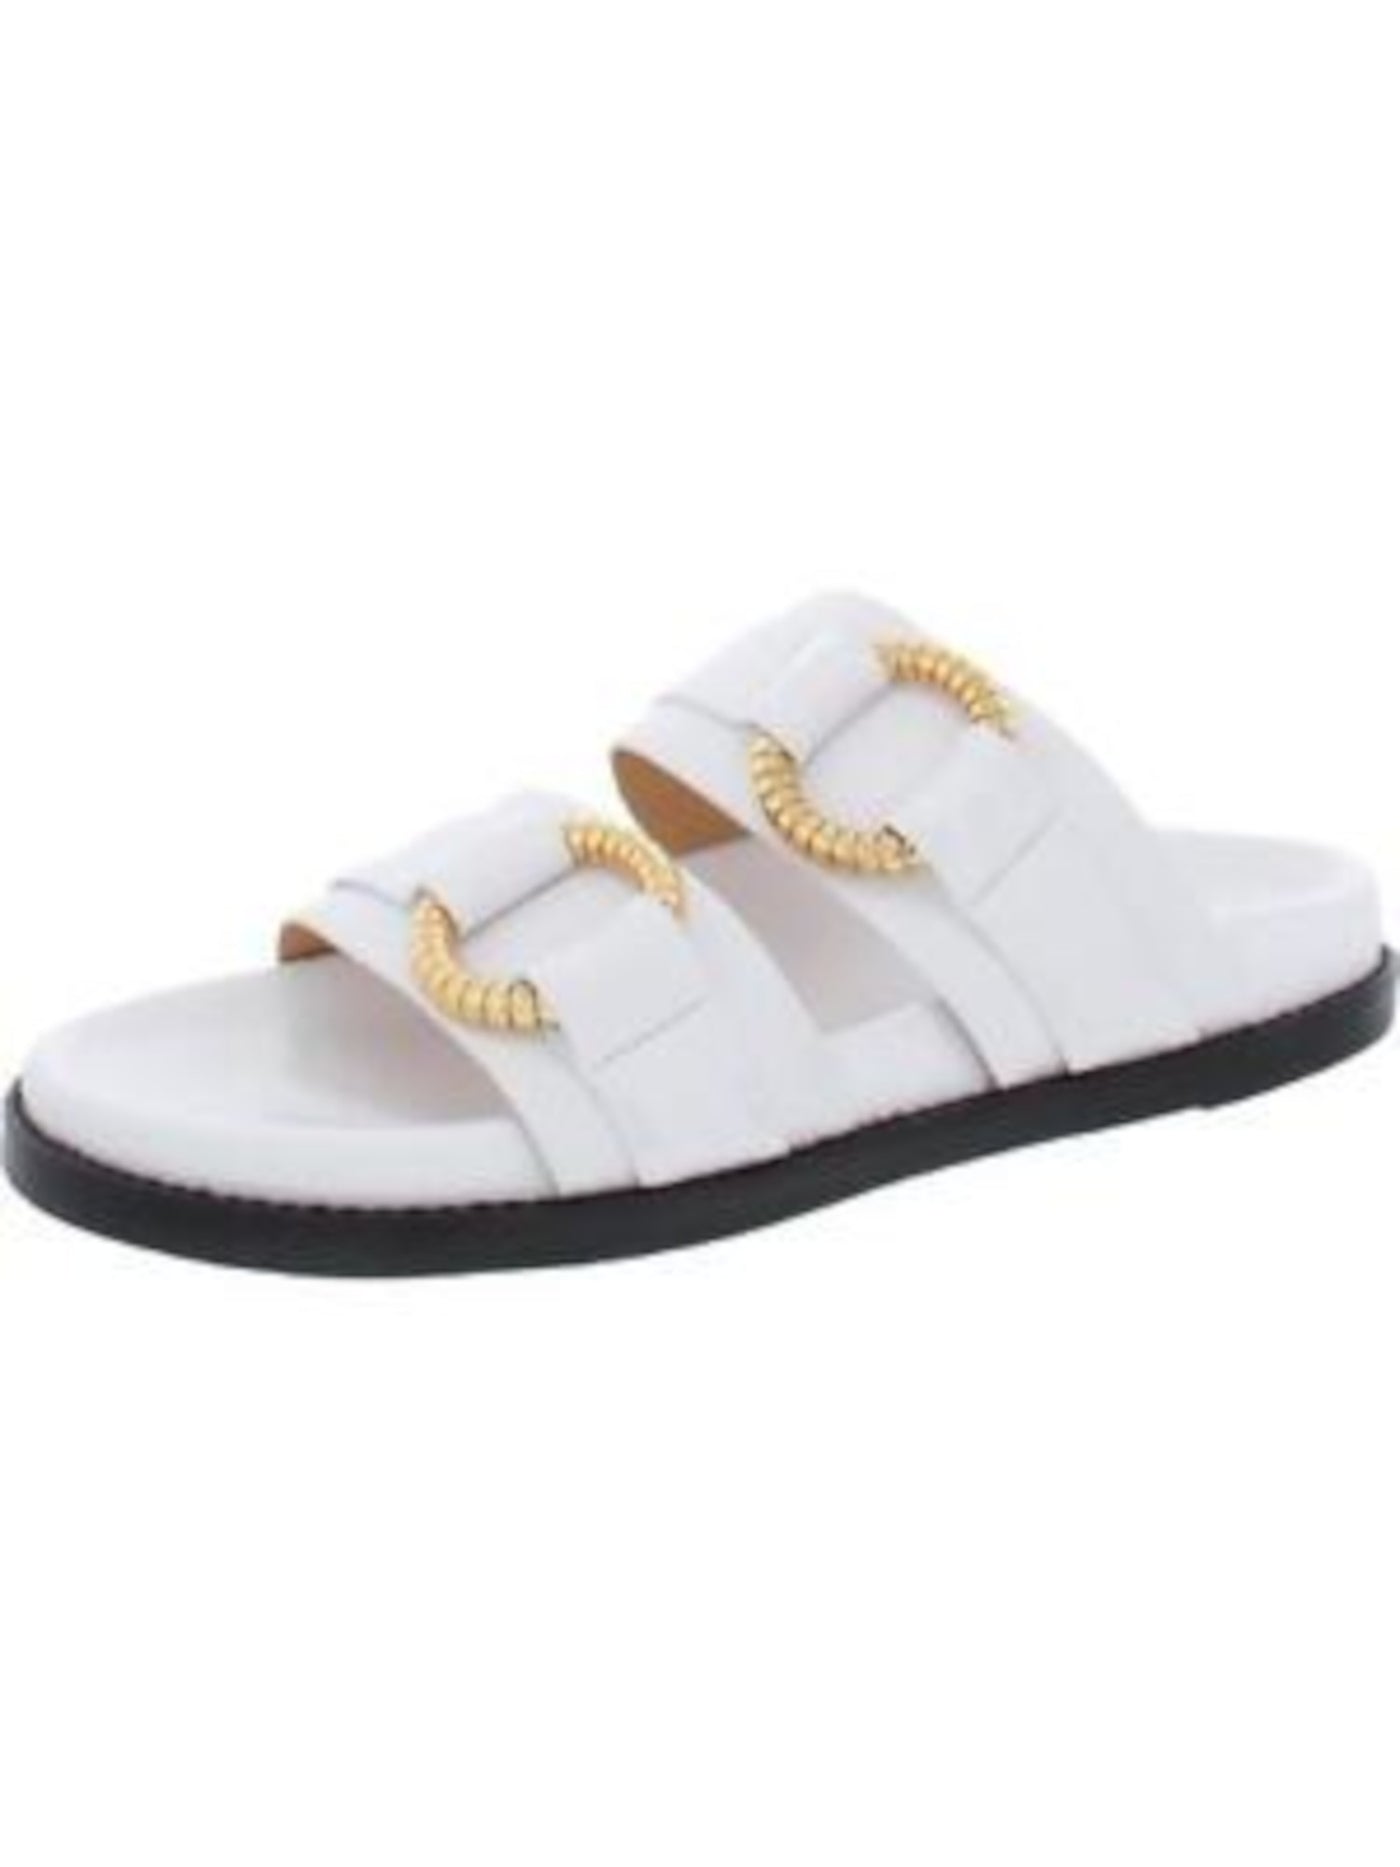 AQUA Womens White Ring Hardware Comfort Round Toe Platform Slip On Leather Slide Sandals Shoes 6.5 B